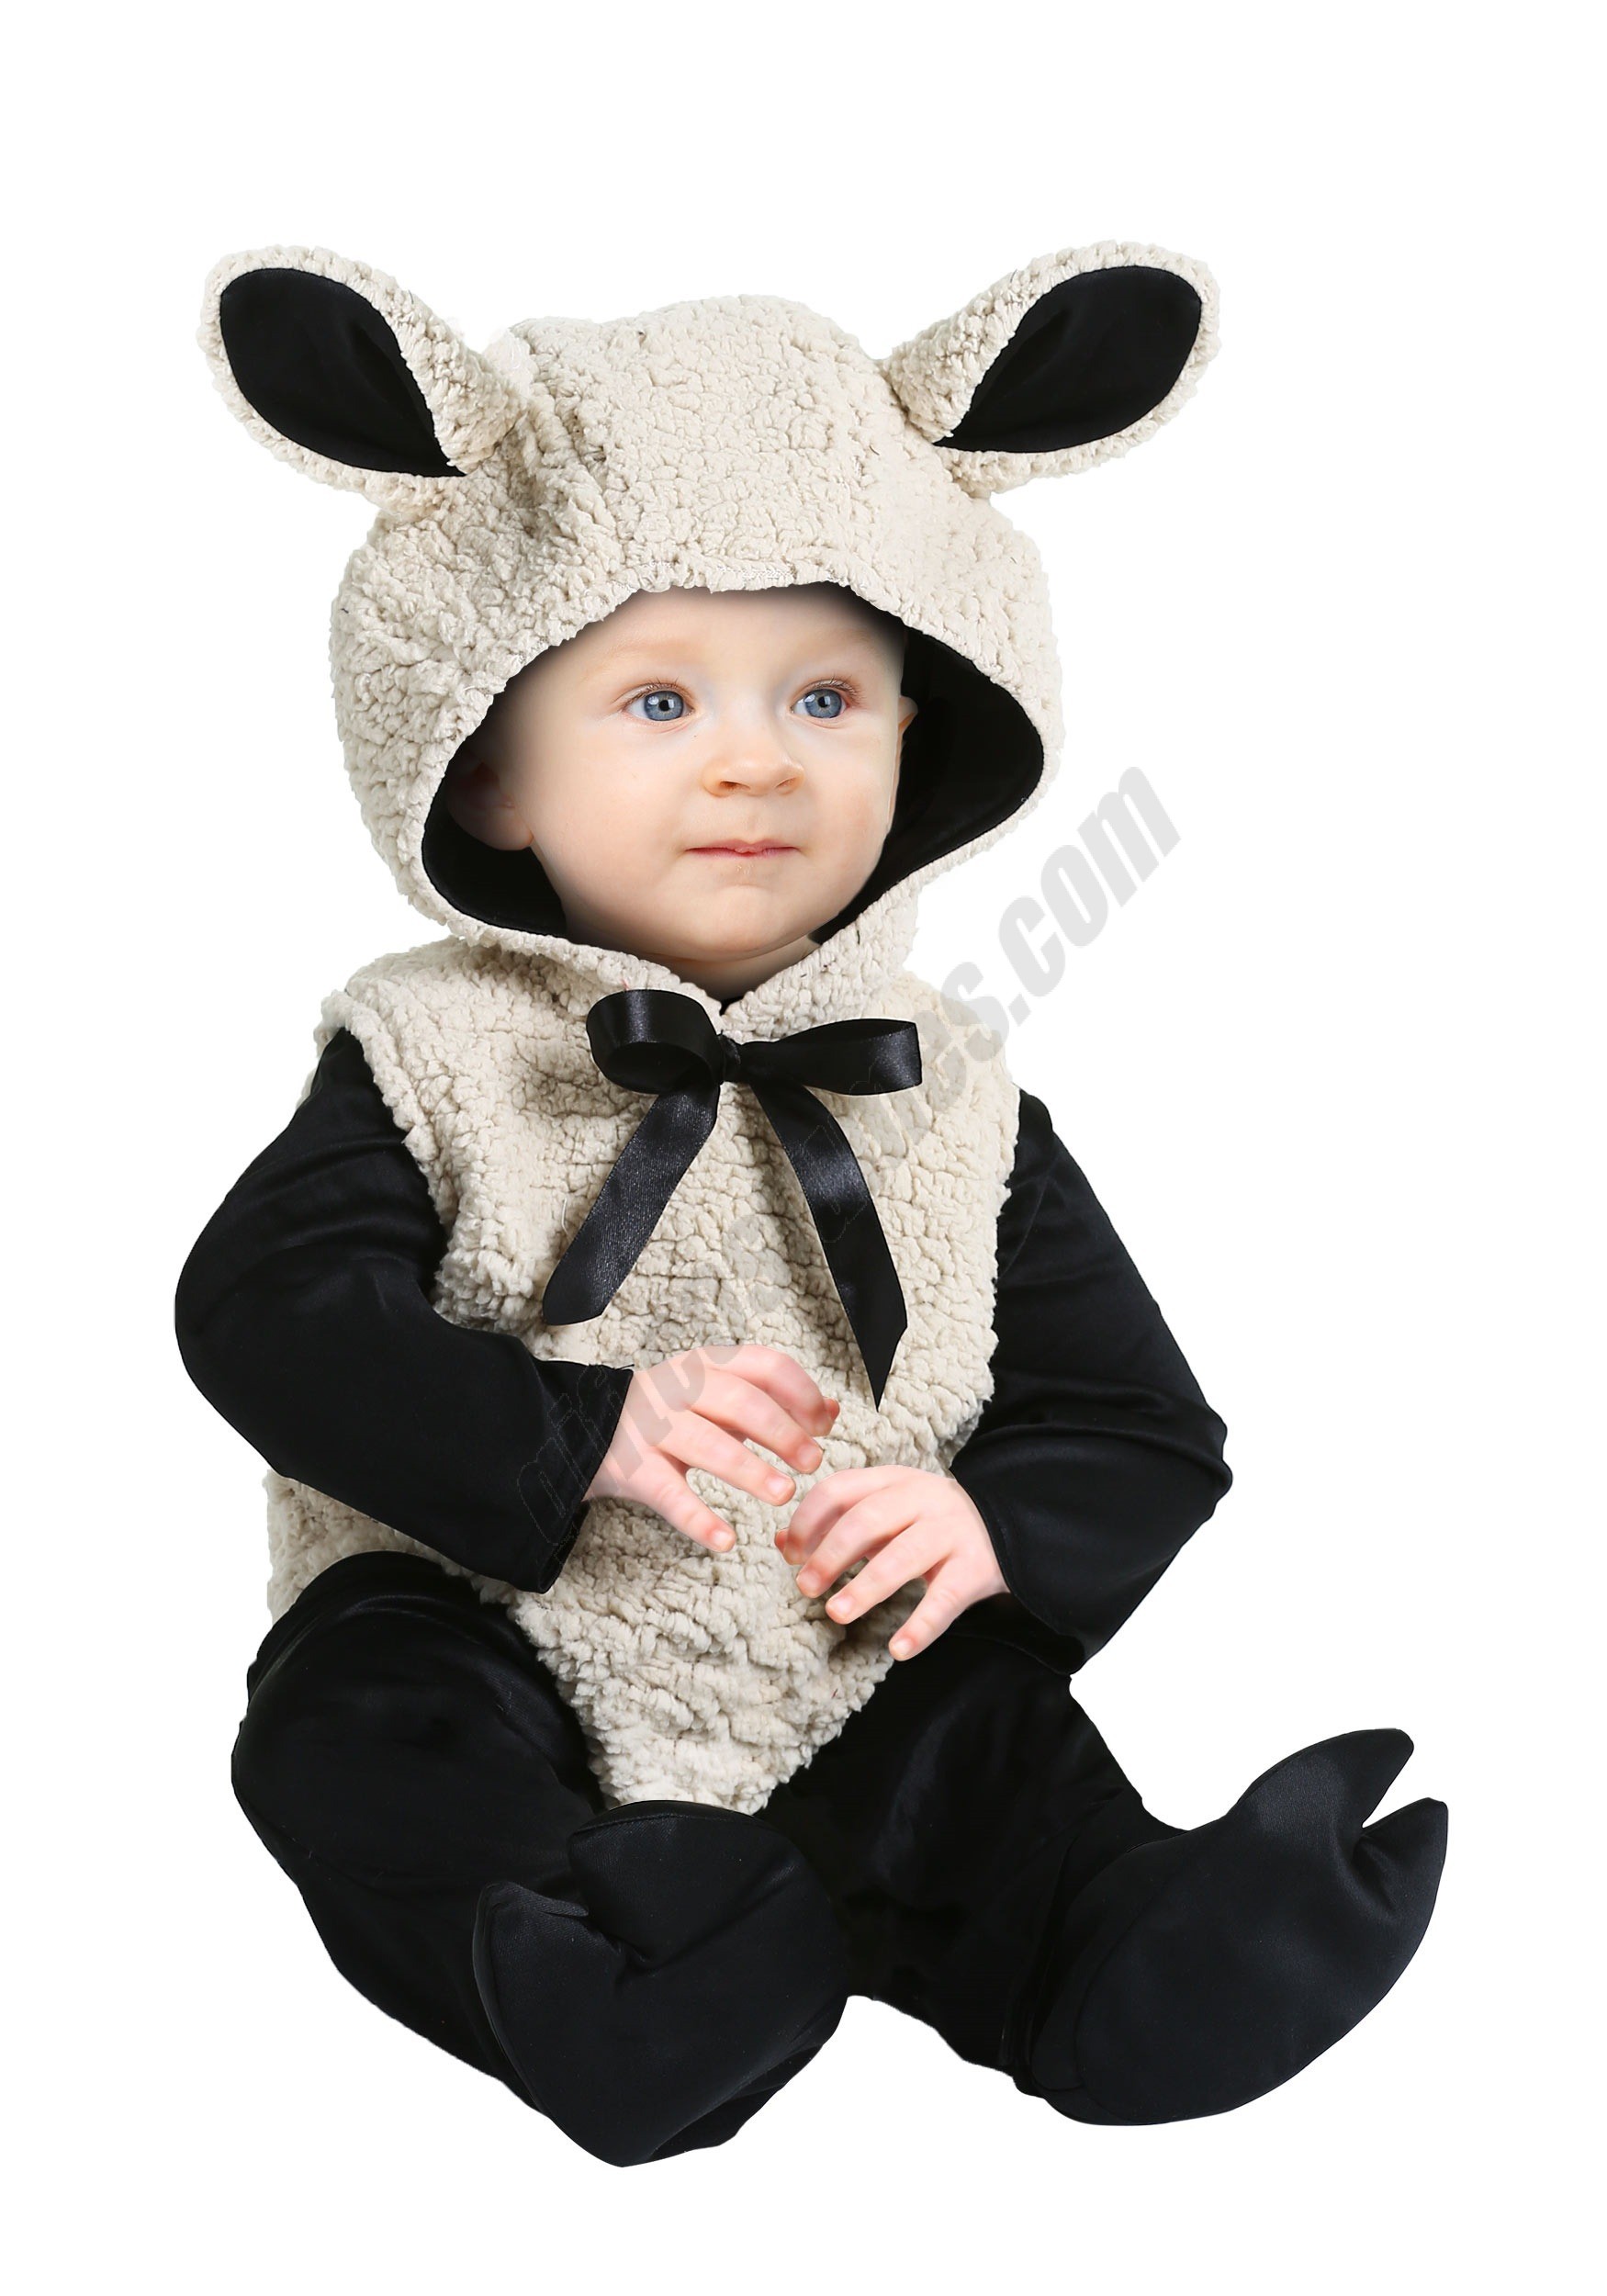 Infant Baby Lamb Costume Promotions - Infant Baby Lamb Costume Promotions